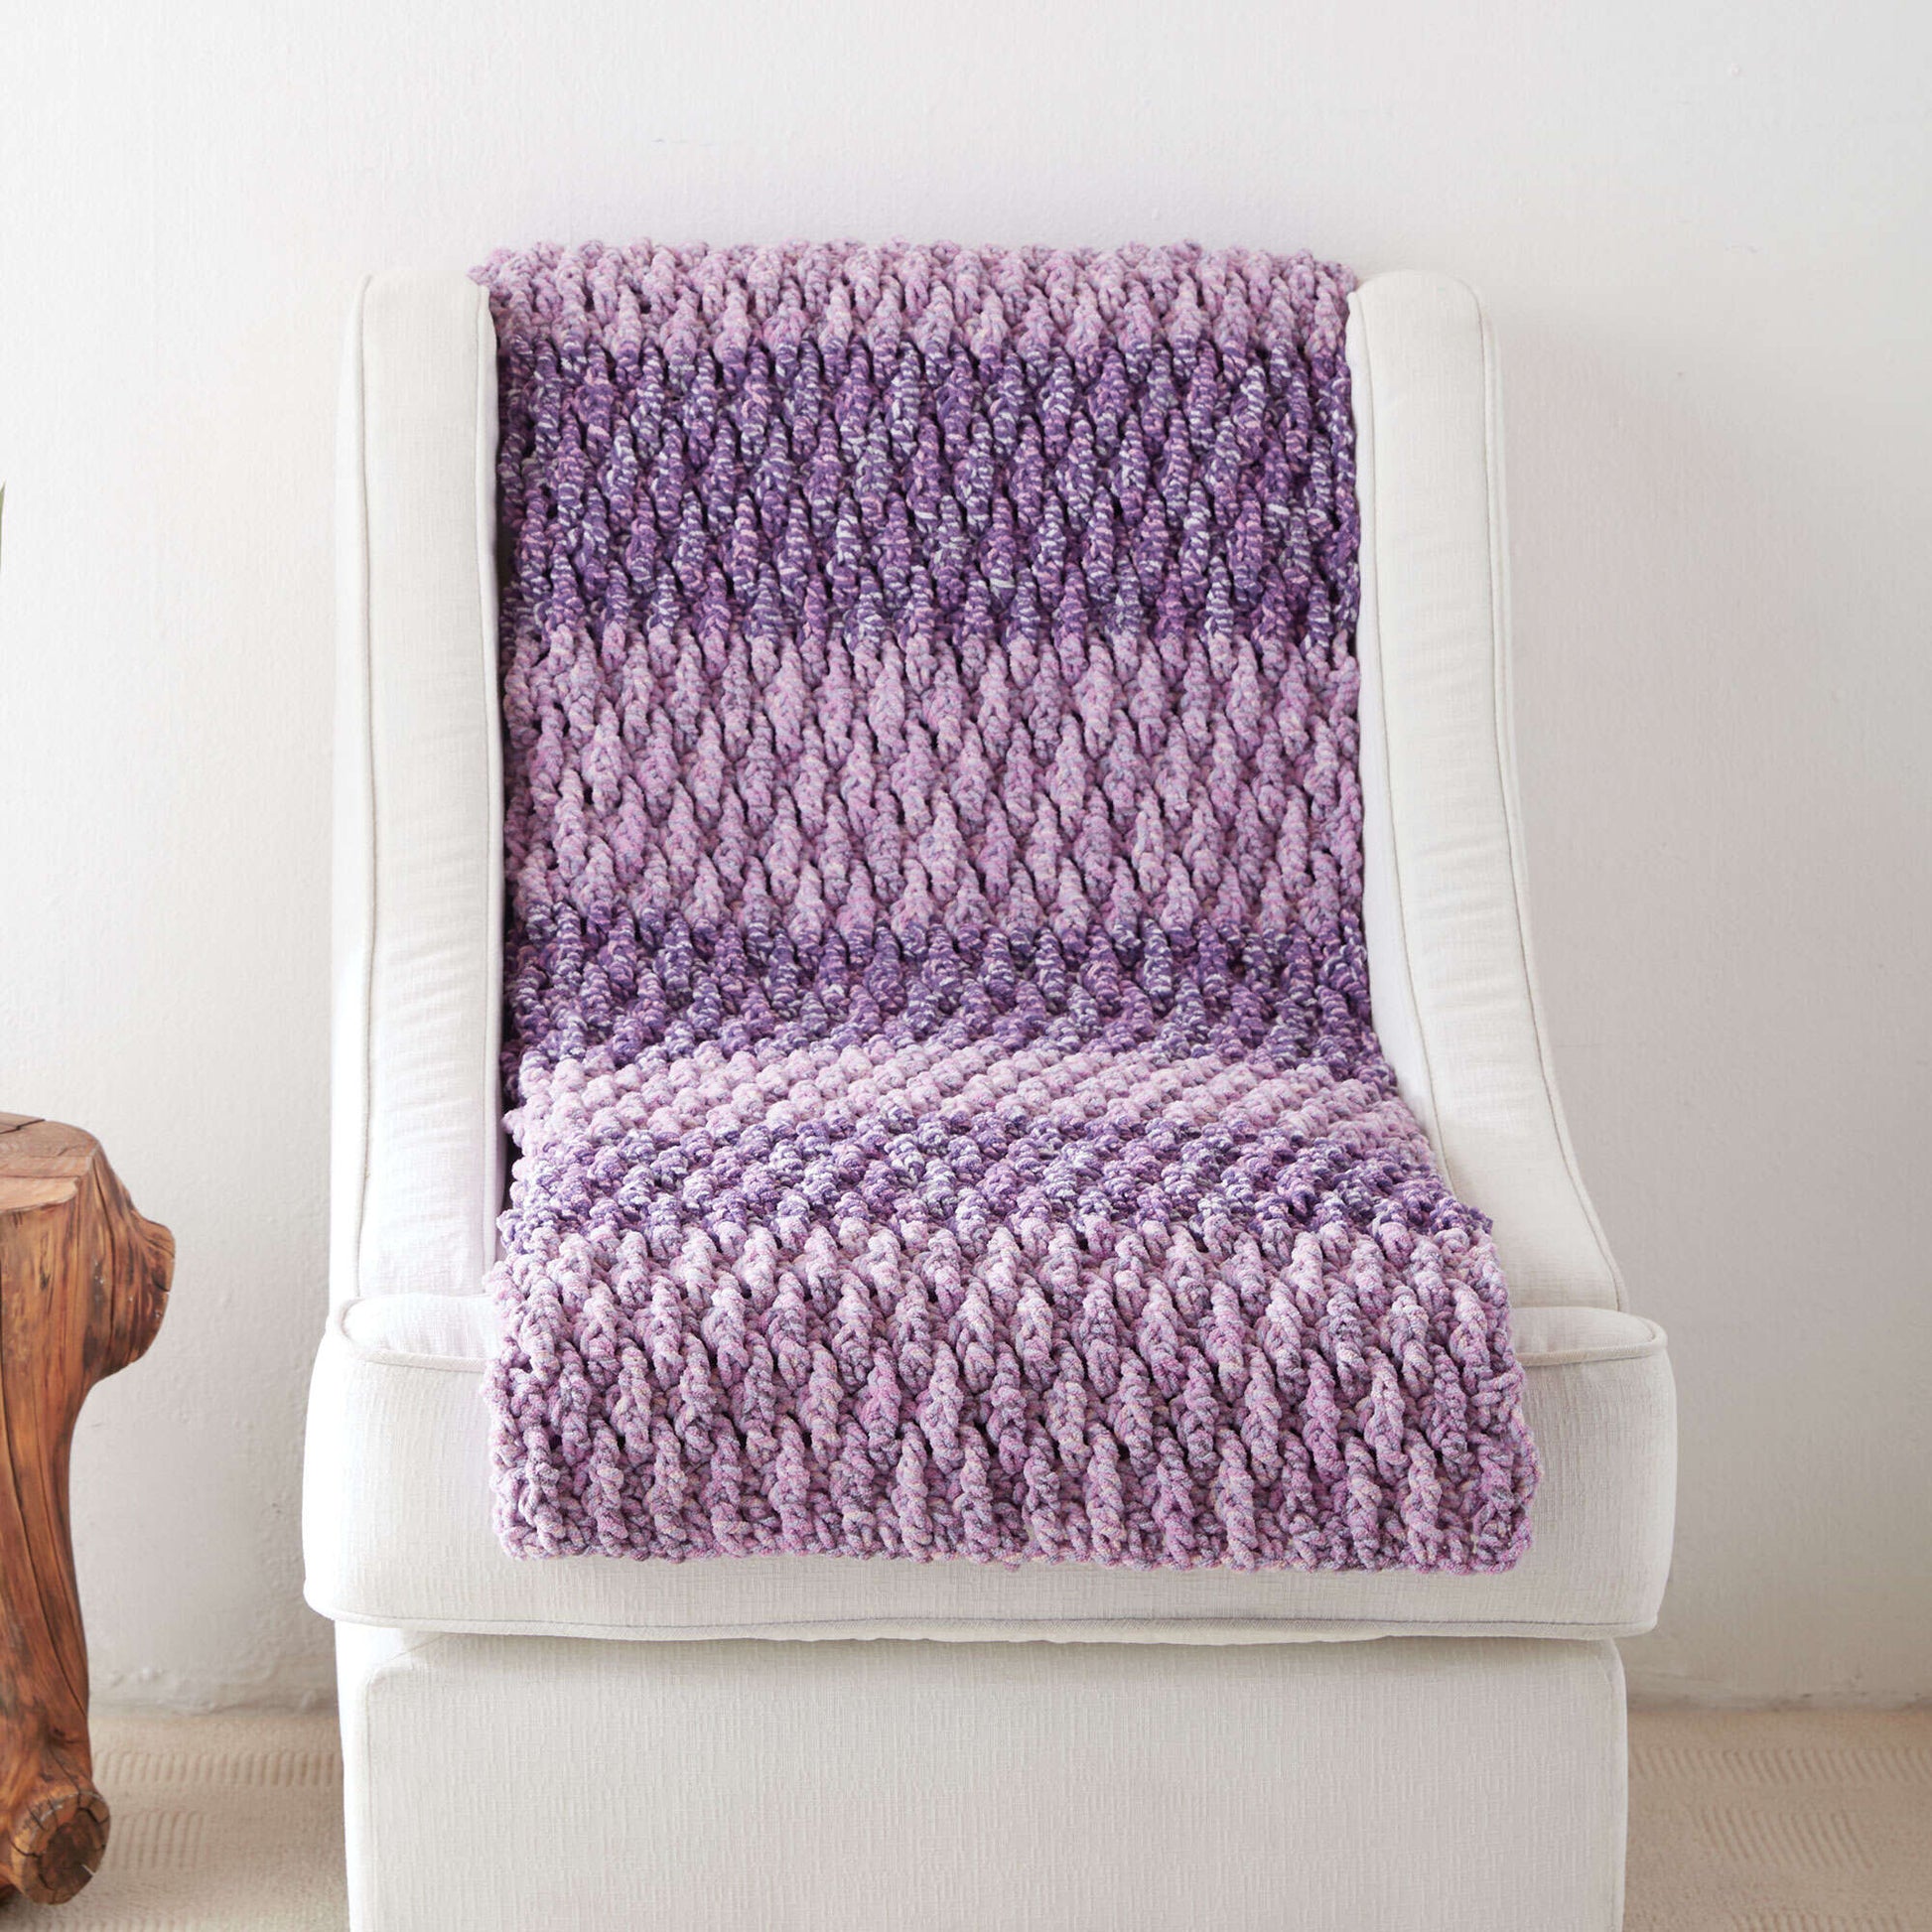 Free Bernat Textured Life Crochet Blanket Pattern